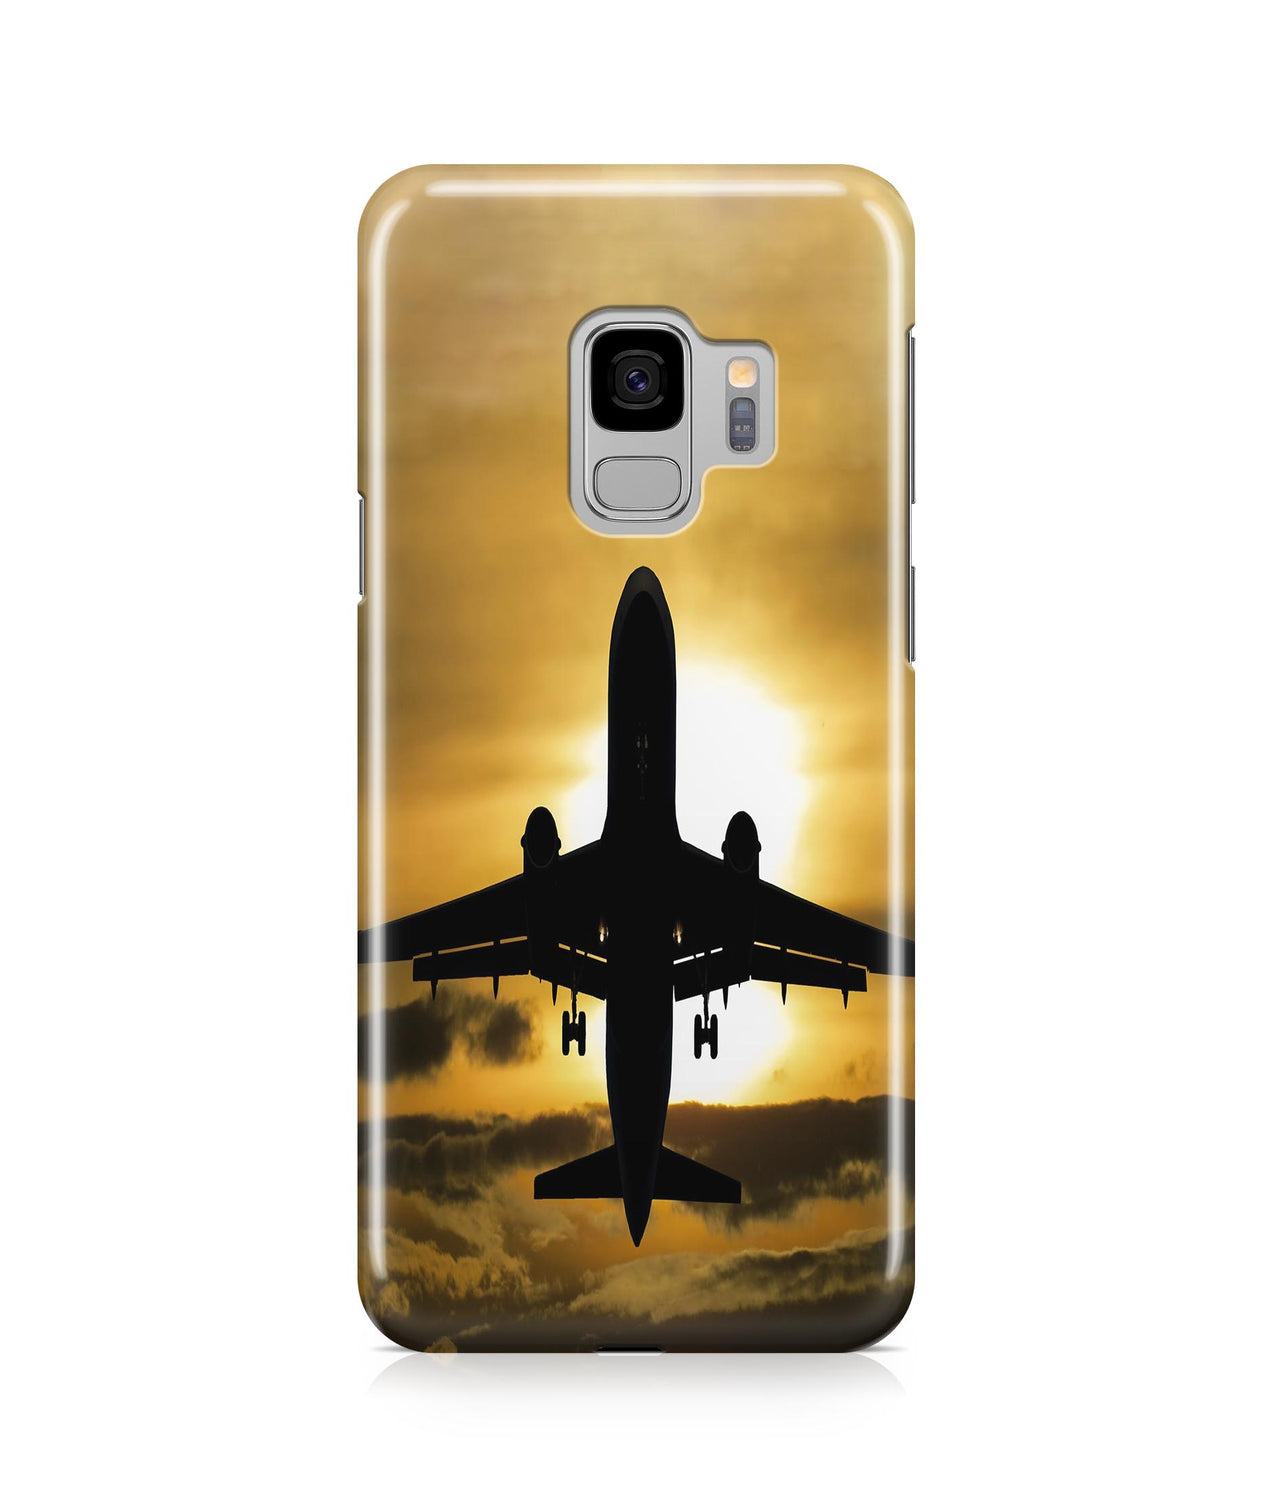 Departing Passanger Jet During Sunset Printed Samsung J Cases